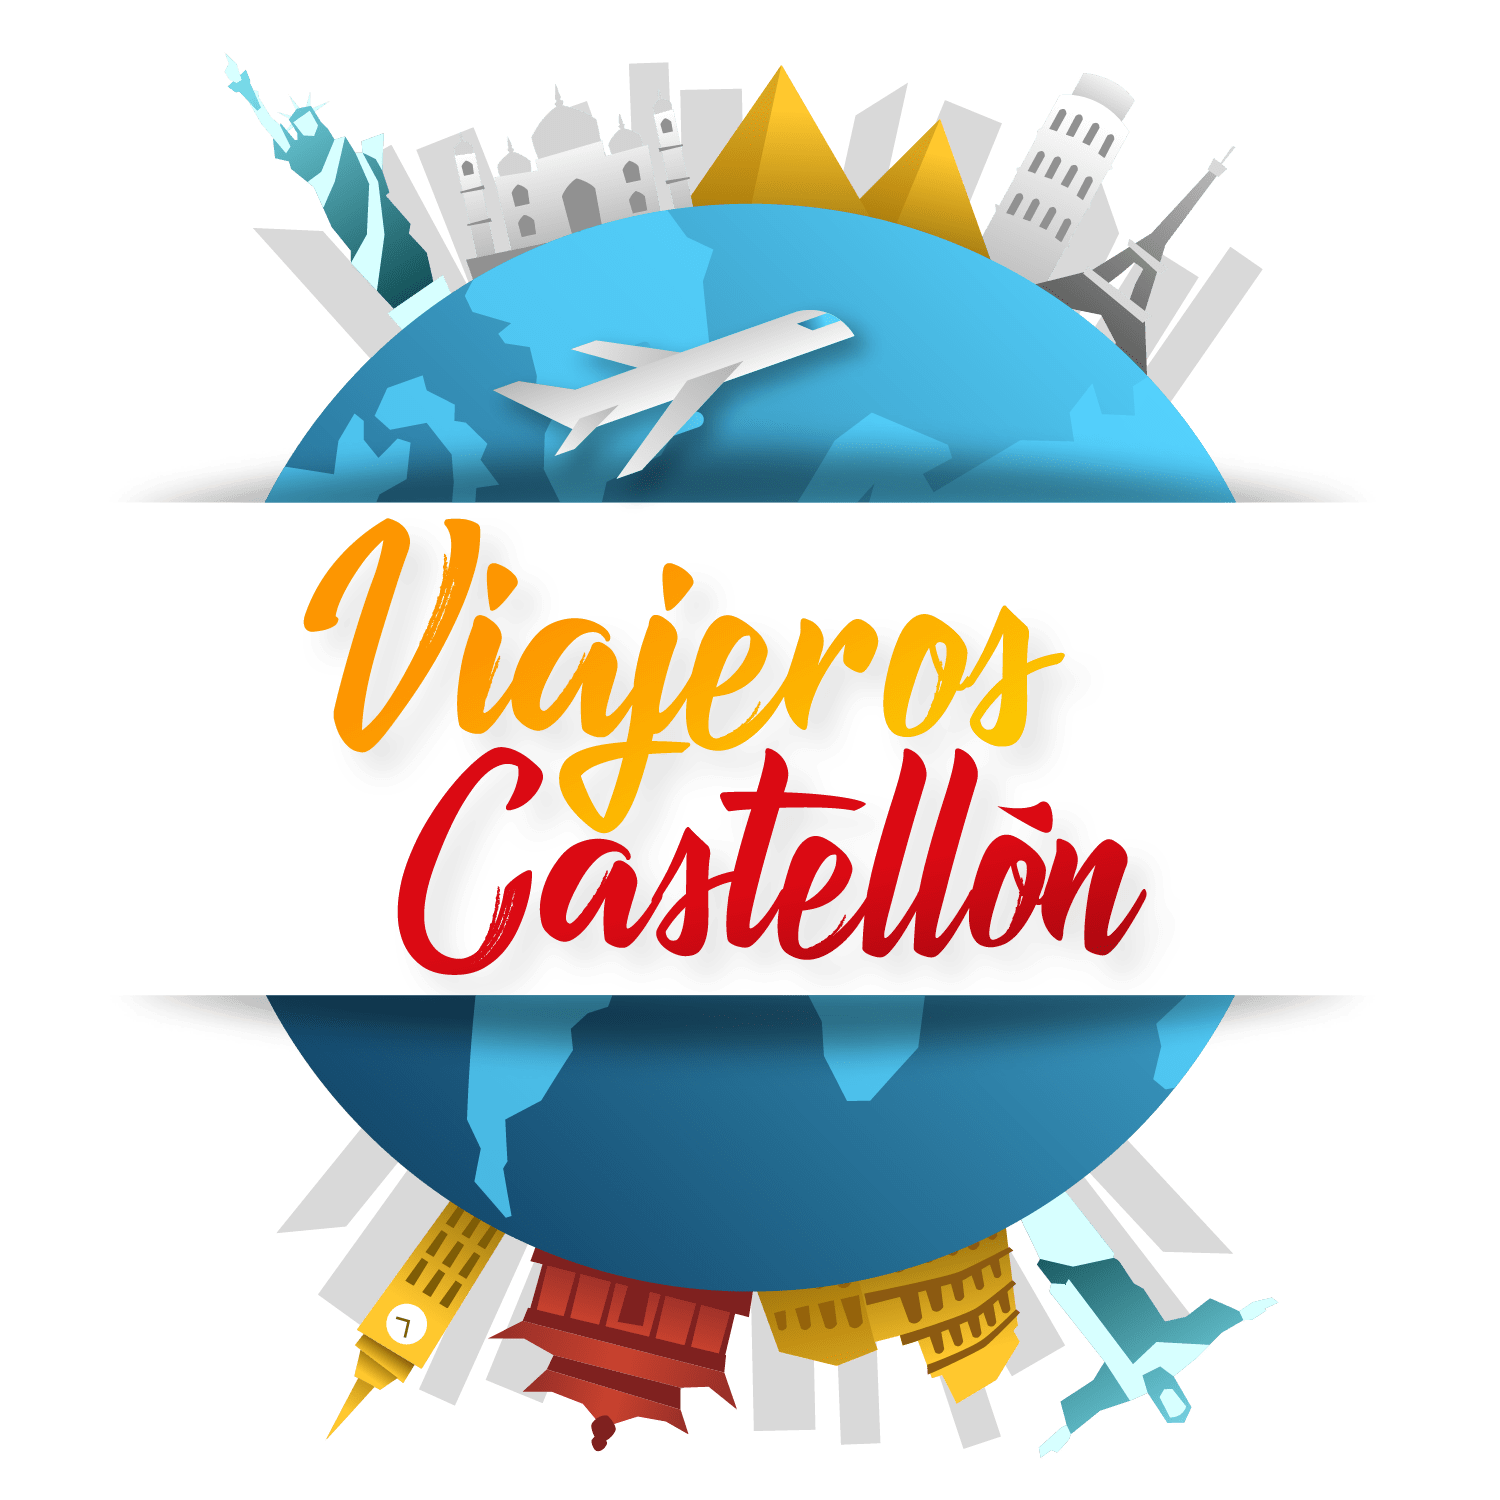 Viajeros de CastellÃ³n